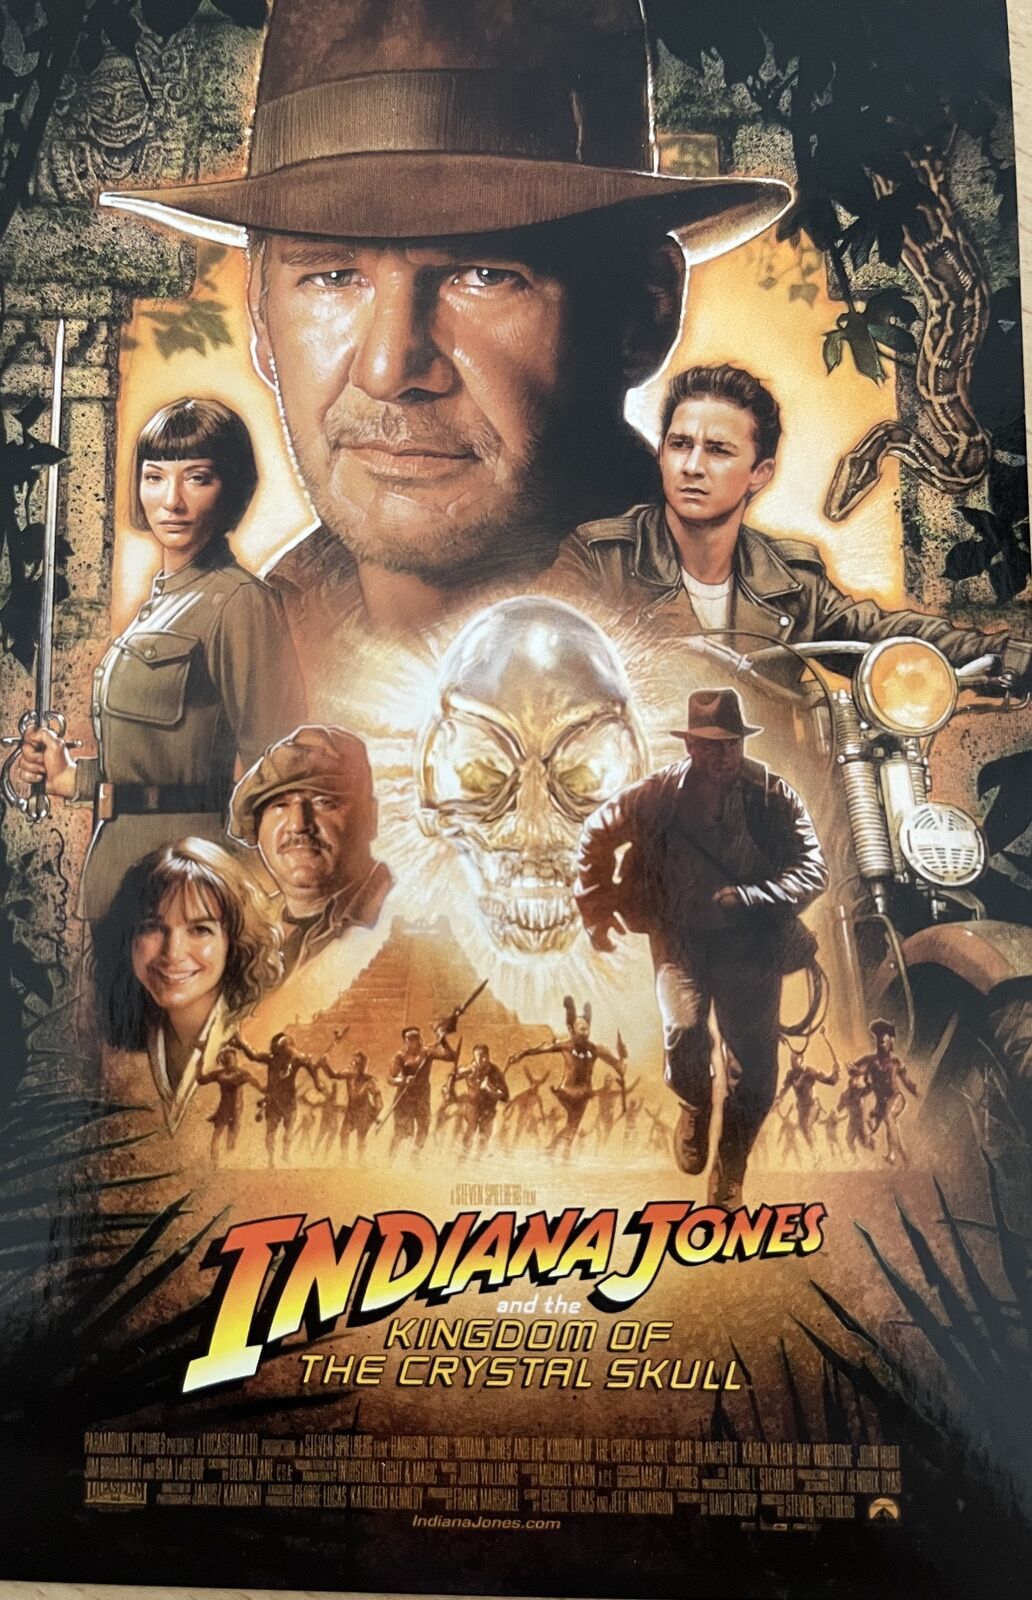 Indiana Jones Personnages Size: 10x15cm POSTCARD